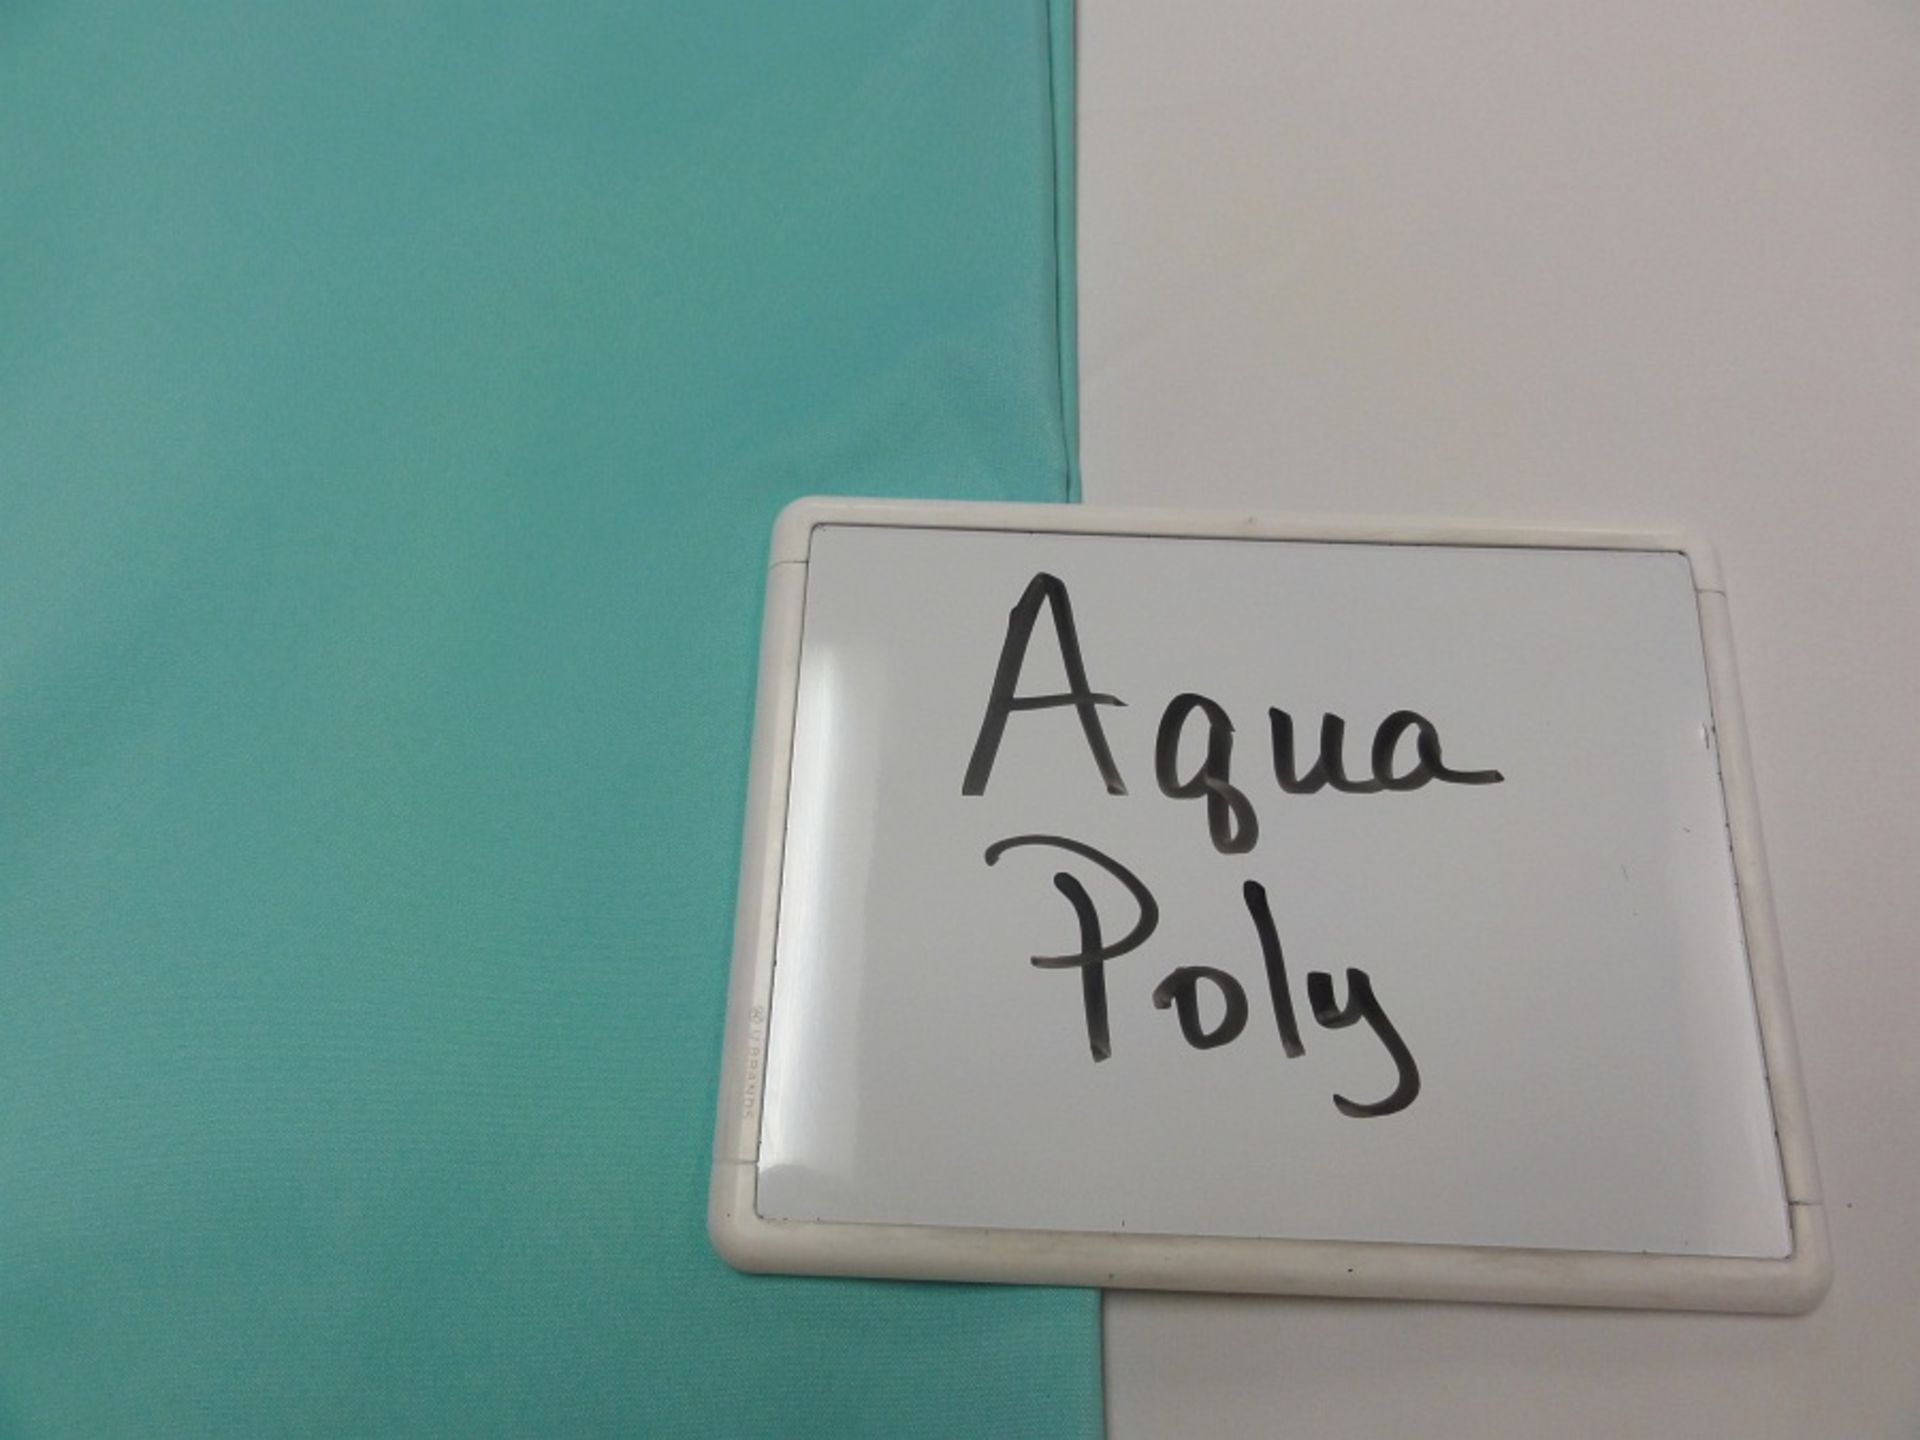 Aqua Poly, Lot of 251 Napkin